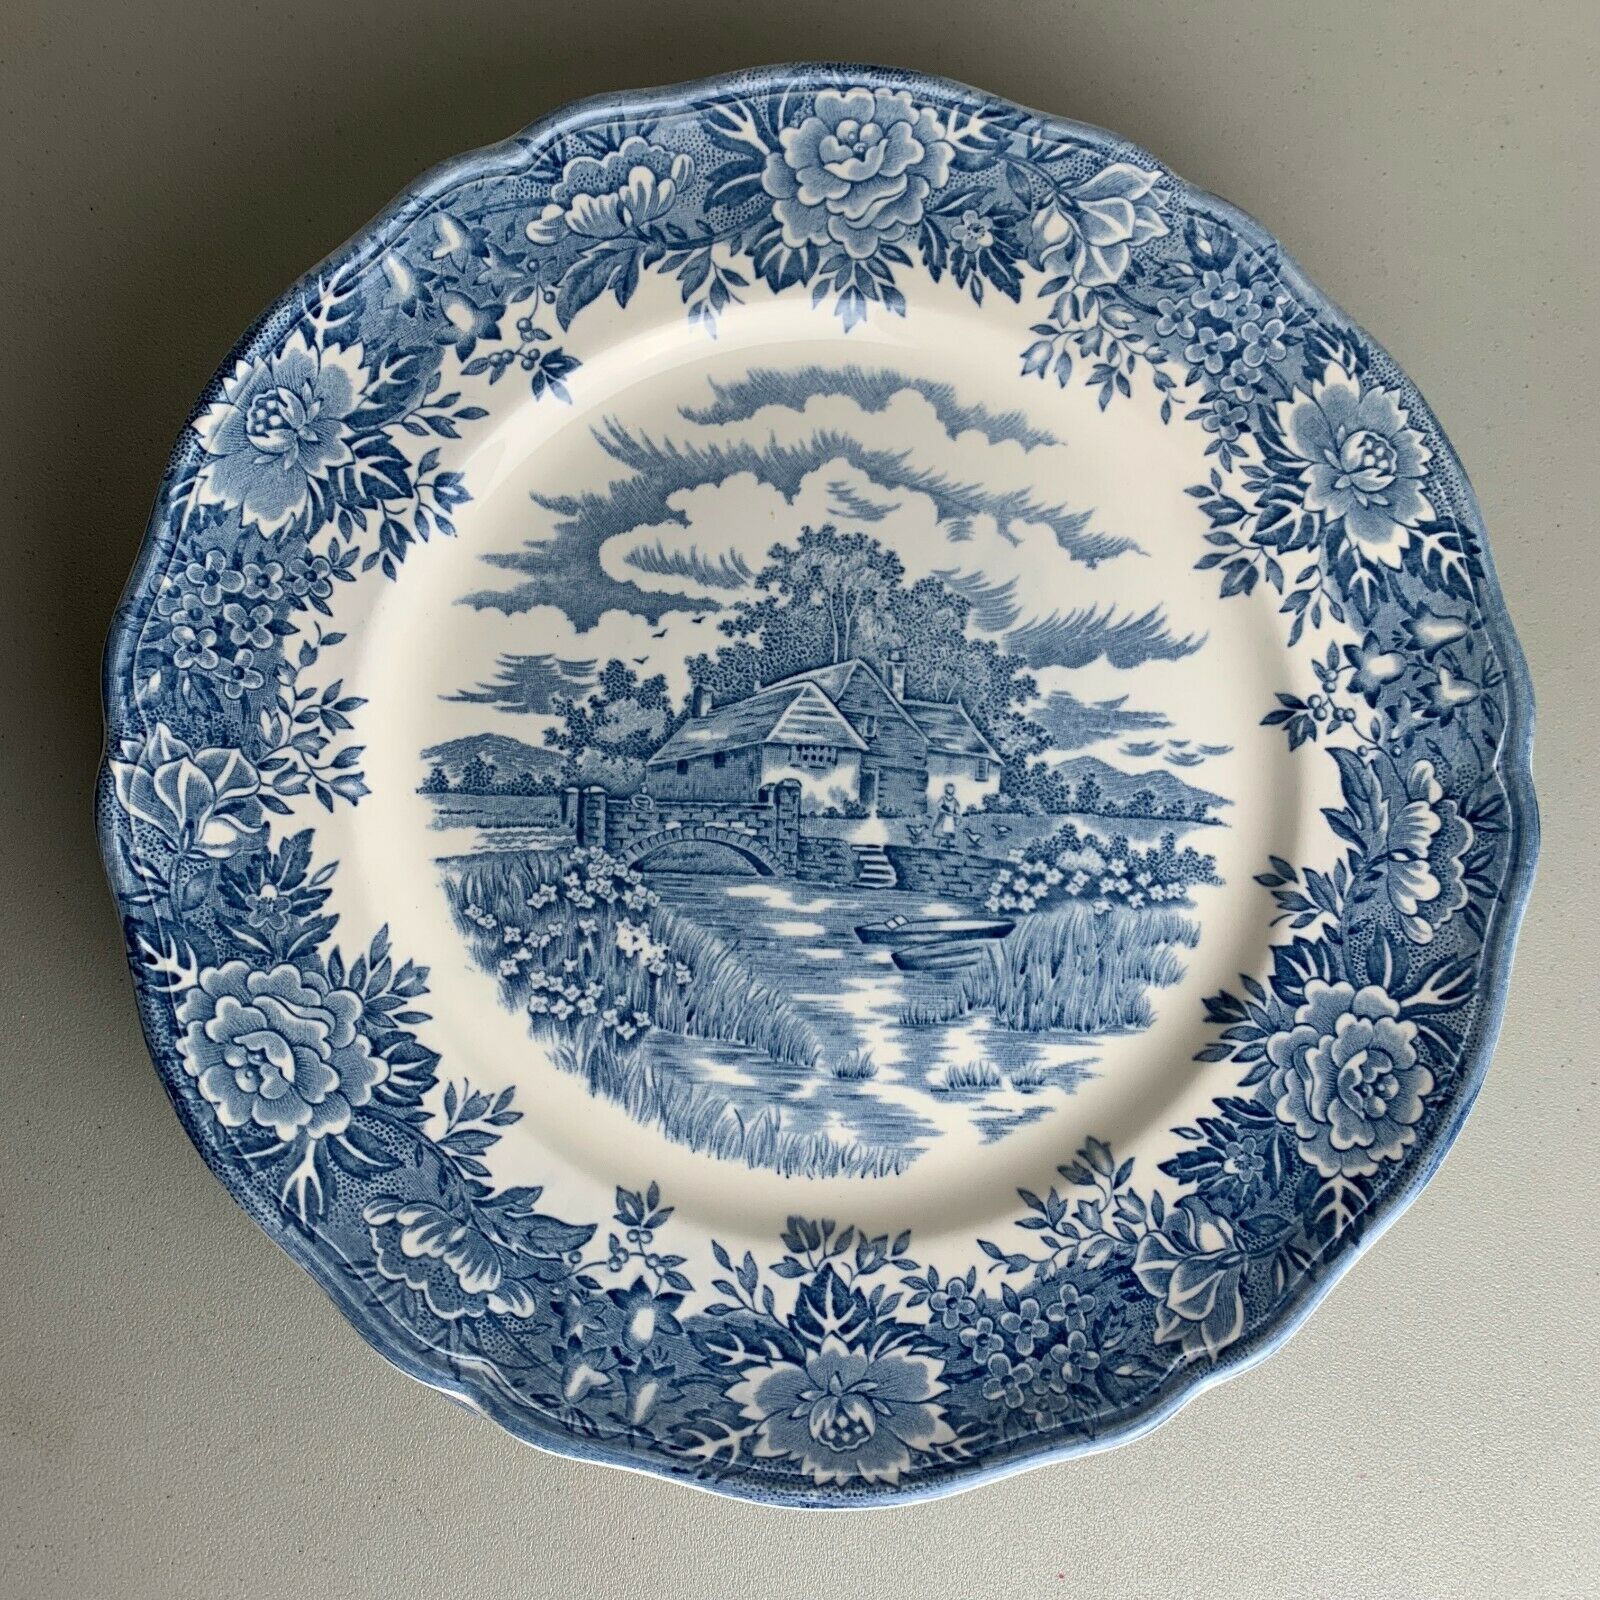 Lot of 5 Dinner Plates VTG Olde Staffordshire English Village Salem China Blue